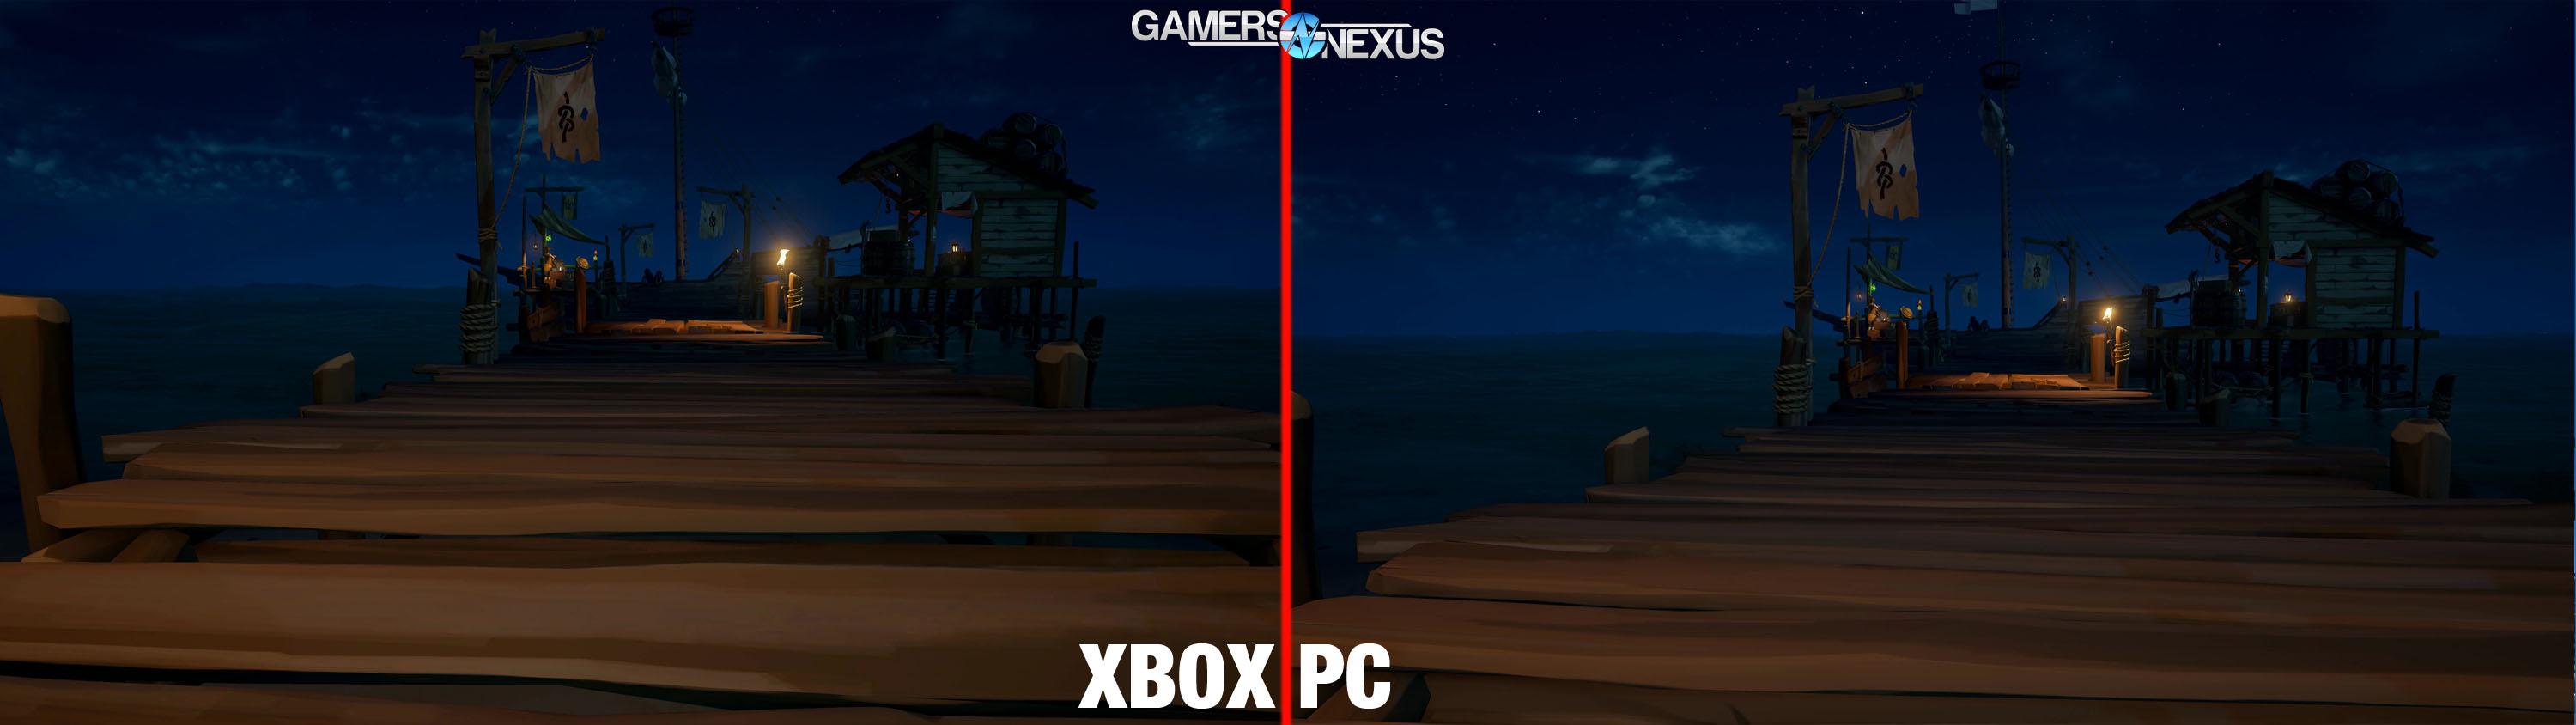 sea of thieves dock xbox vs pc